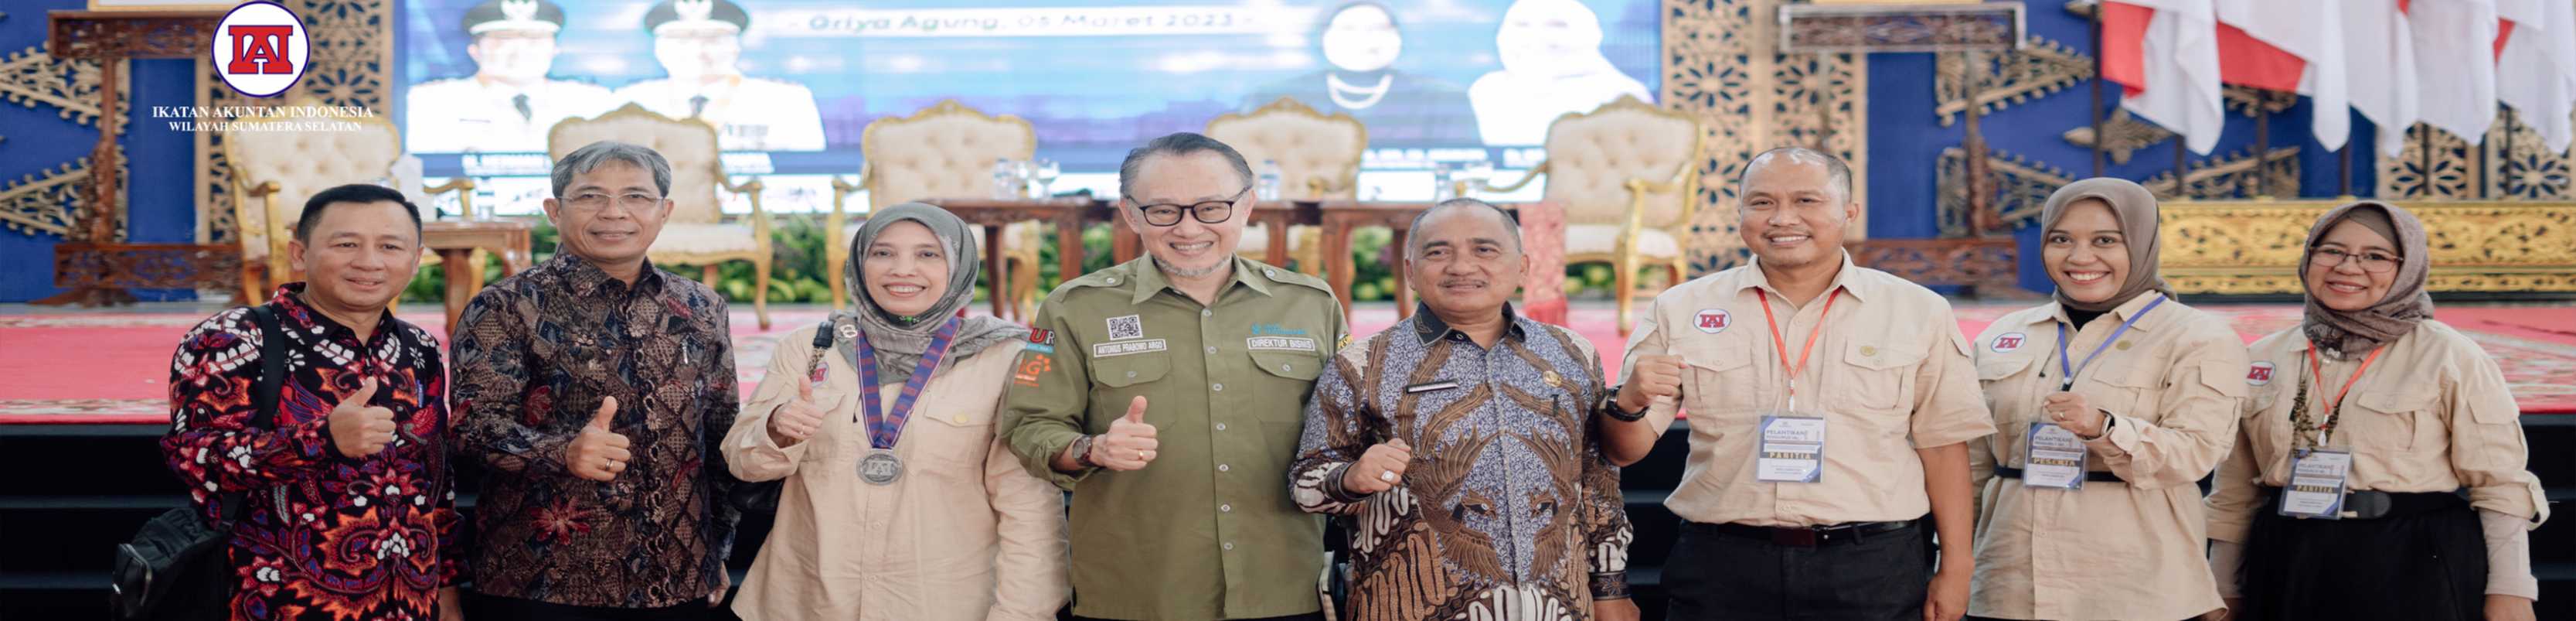 Ikatan Akuntan Indonesia Wilayah Sumatera Selatan